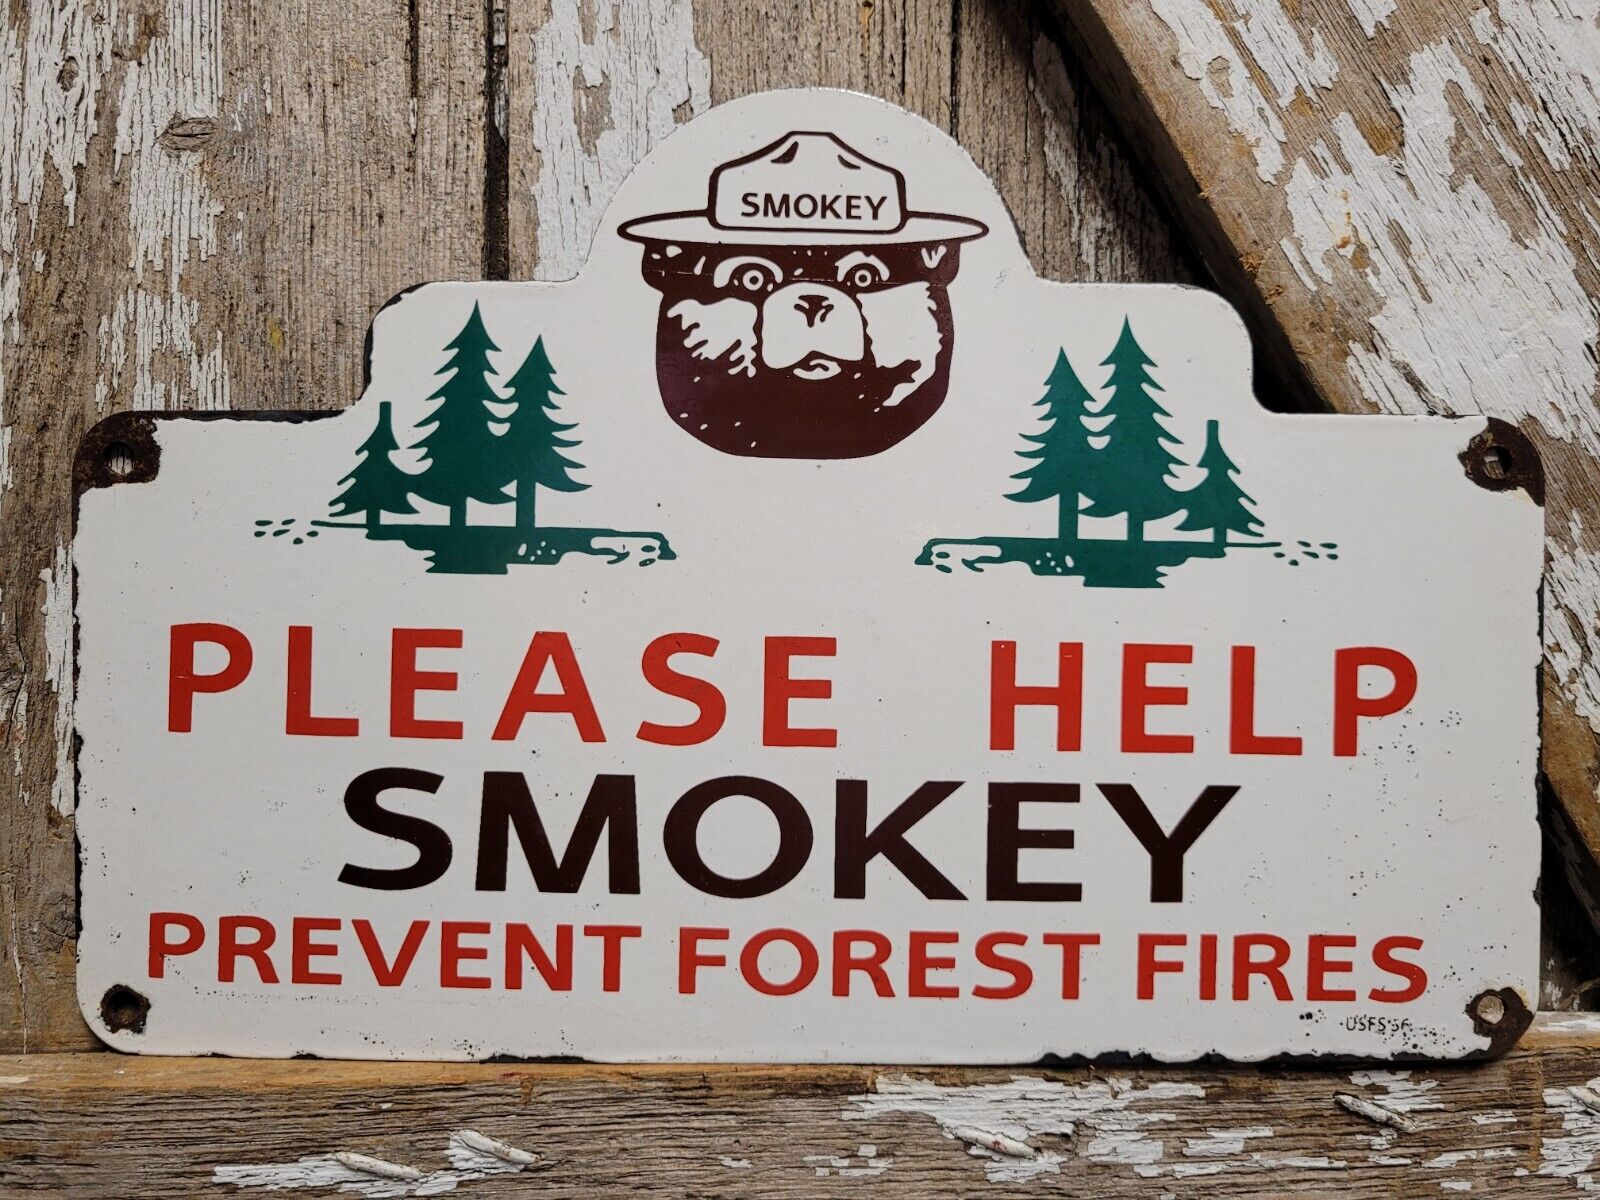 VINTAGE SMOKEY BEAR PORCELAIN SIGN 1956 US FOREST SERVICE NATIONAL PARK FIRE 